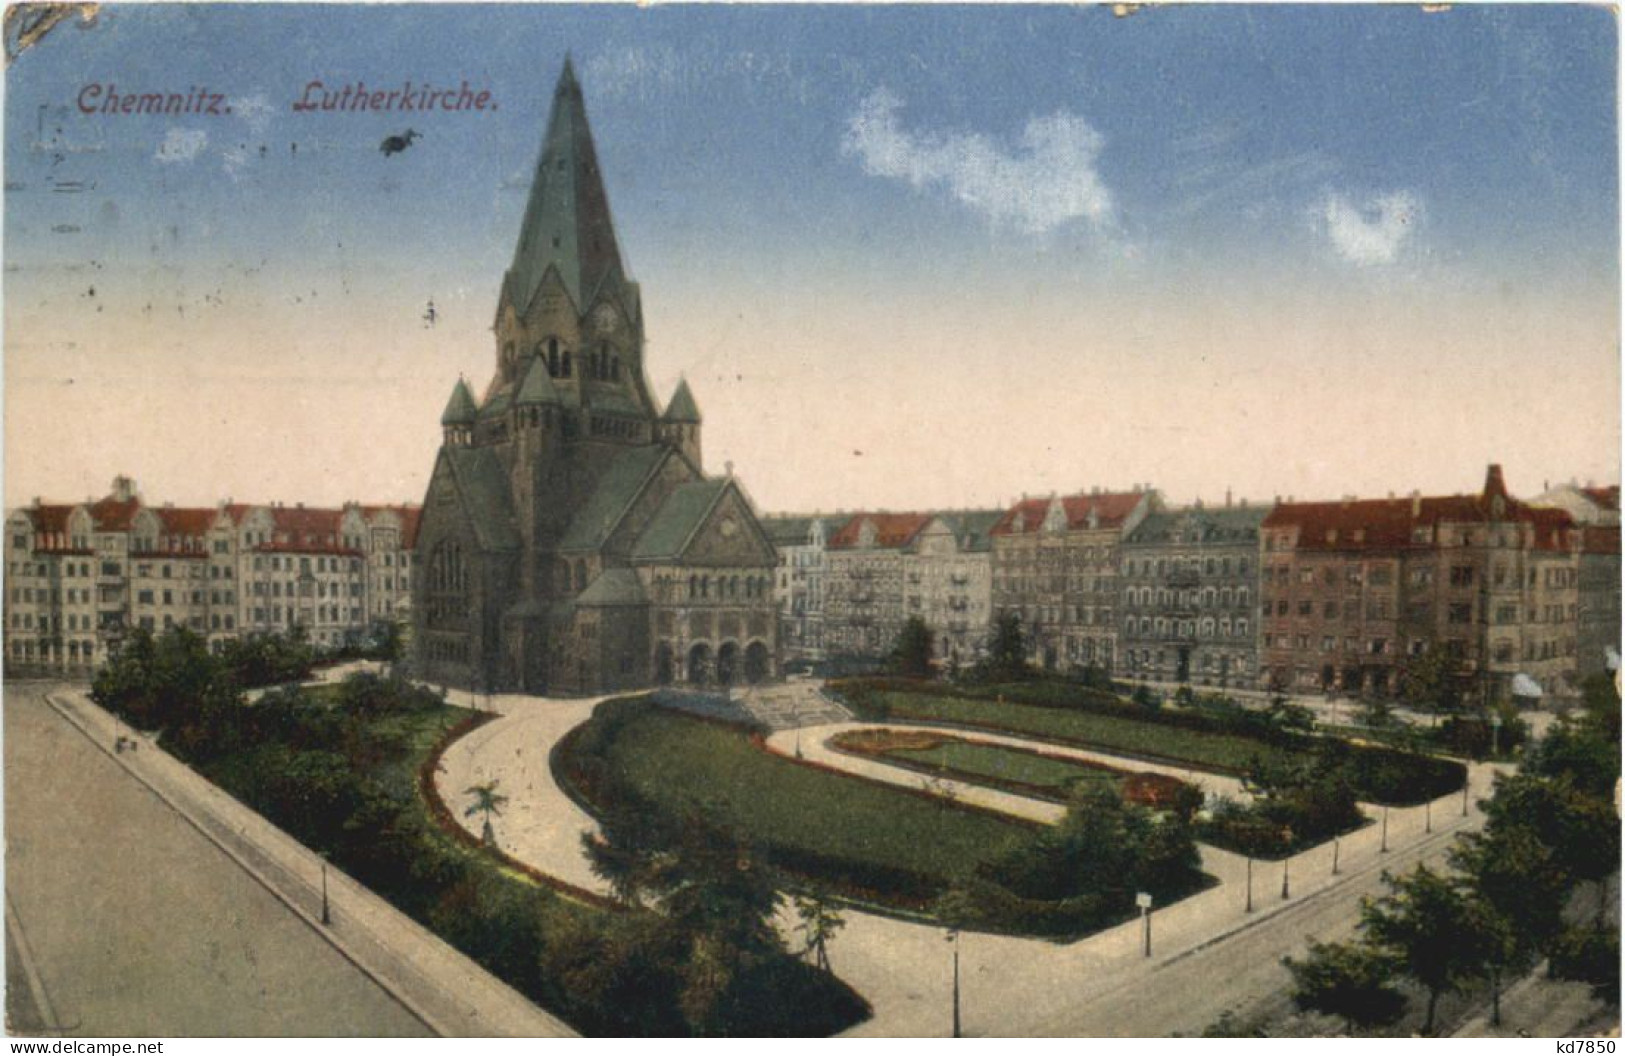 Chemnitz - Lutherkirche - Chemnitz